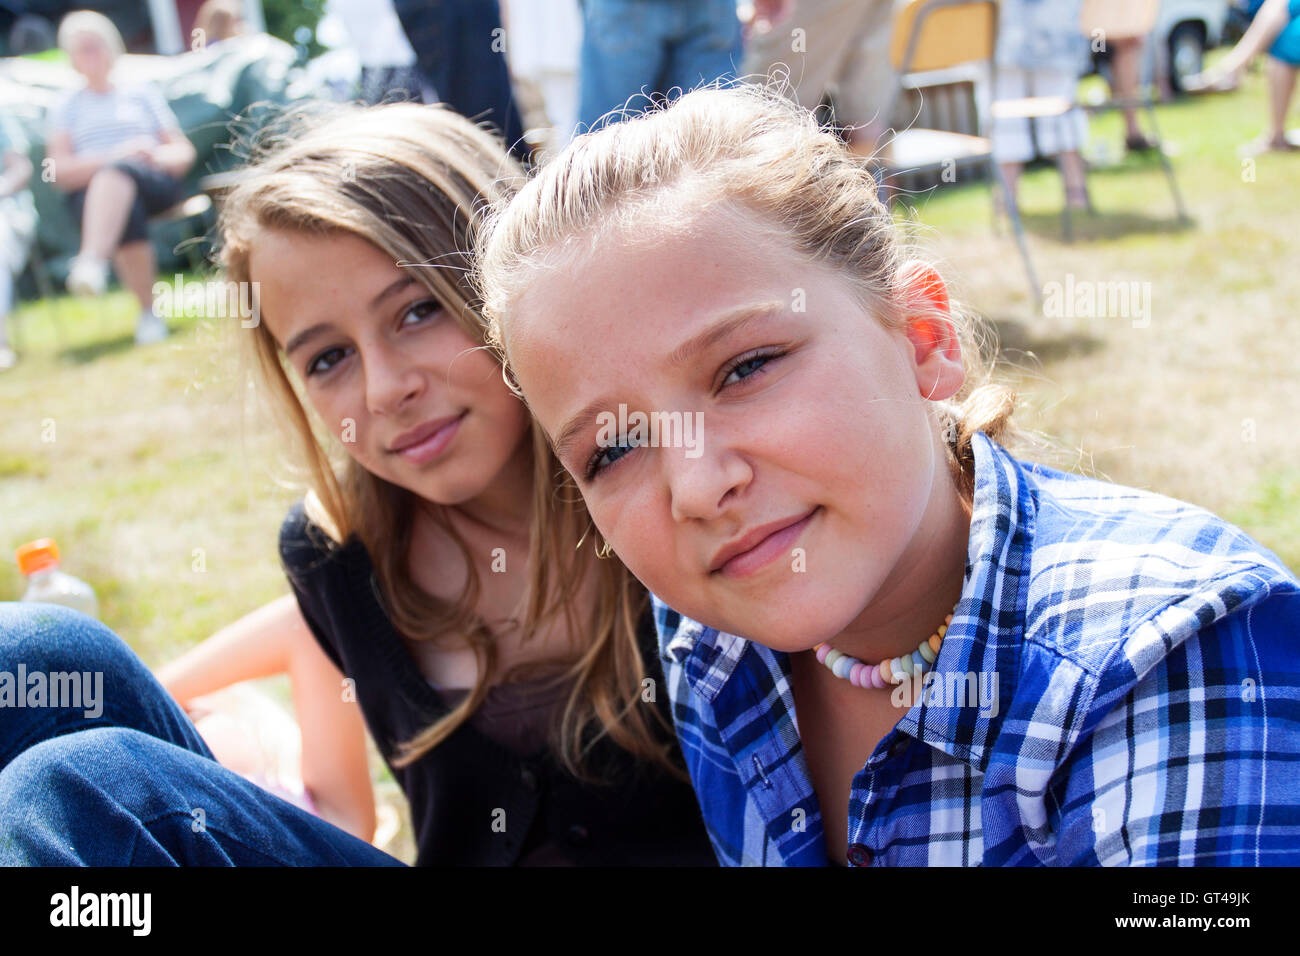 Girls at festival Stock Photo